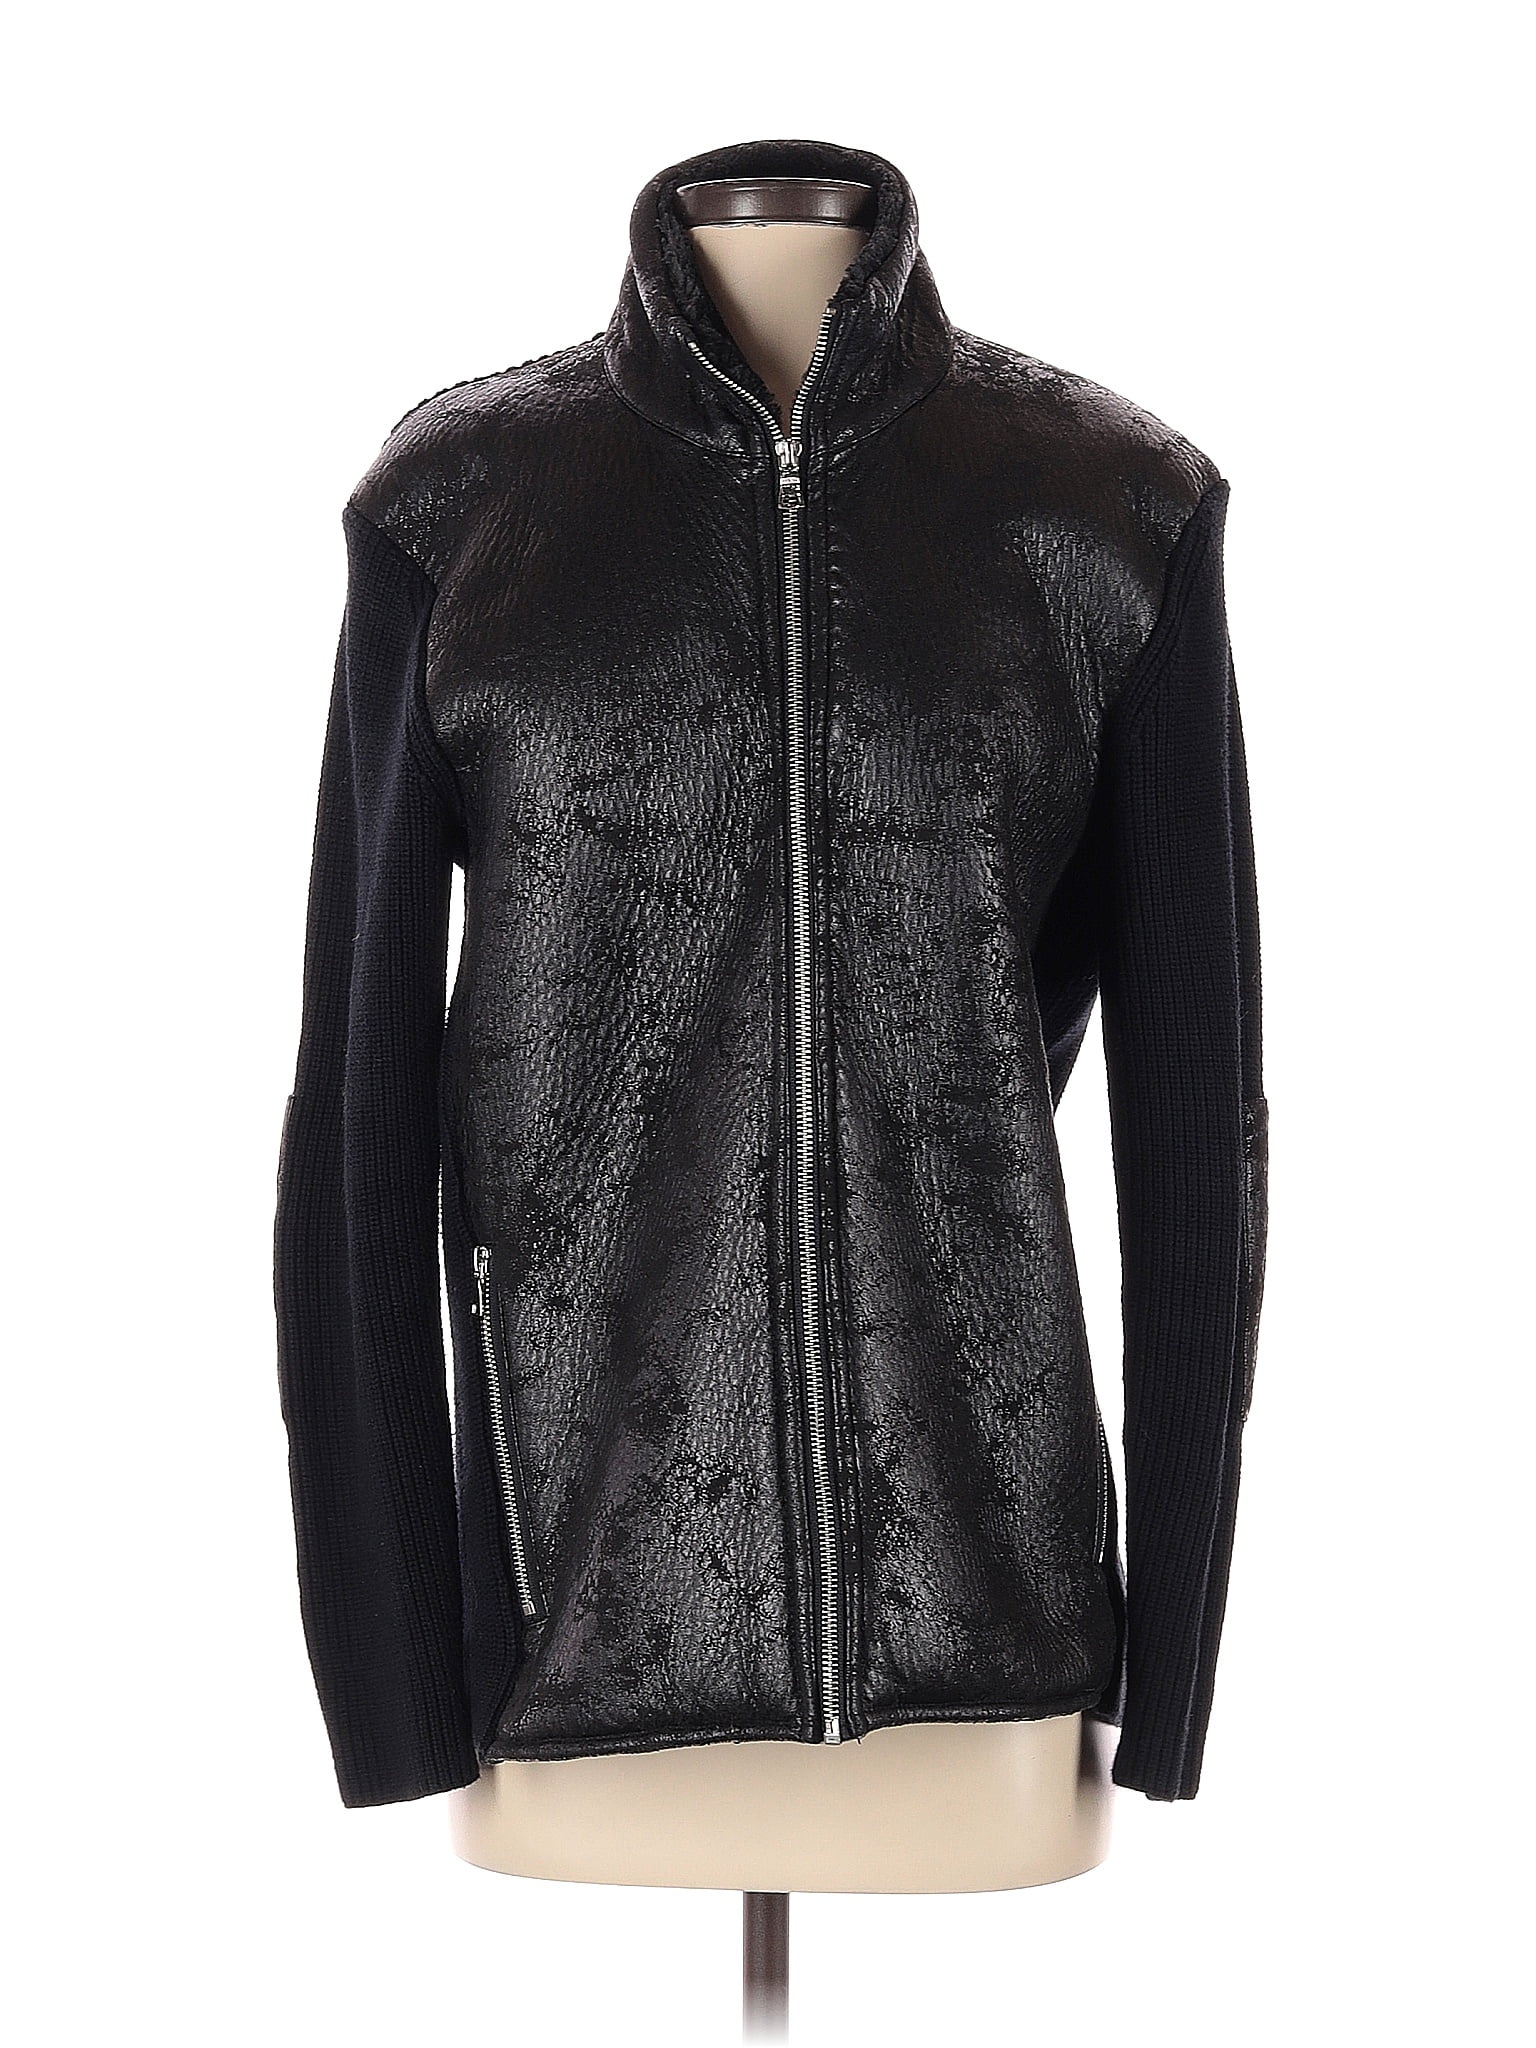 INC International Concepts 100% Polyester Black Jacket Size S - 88% off ...